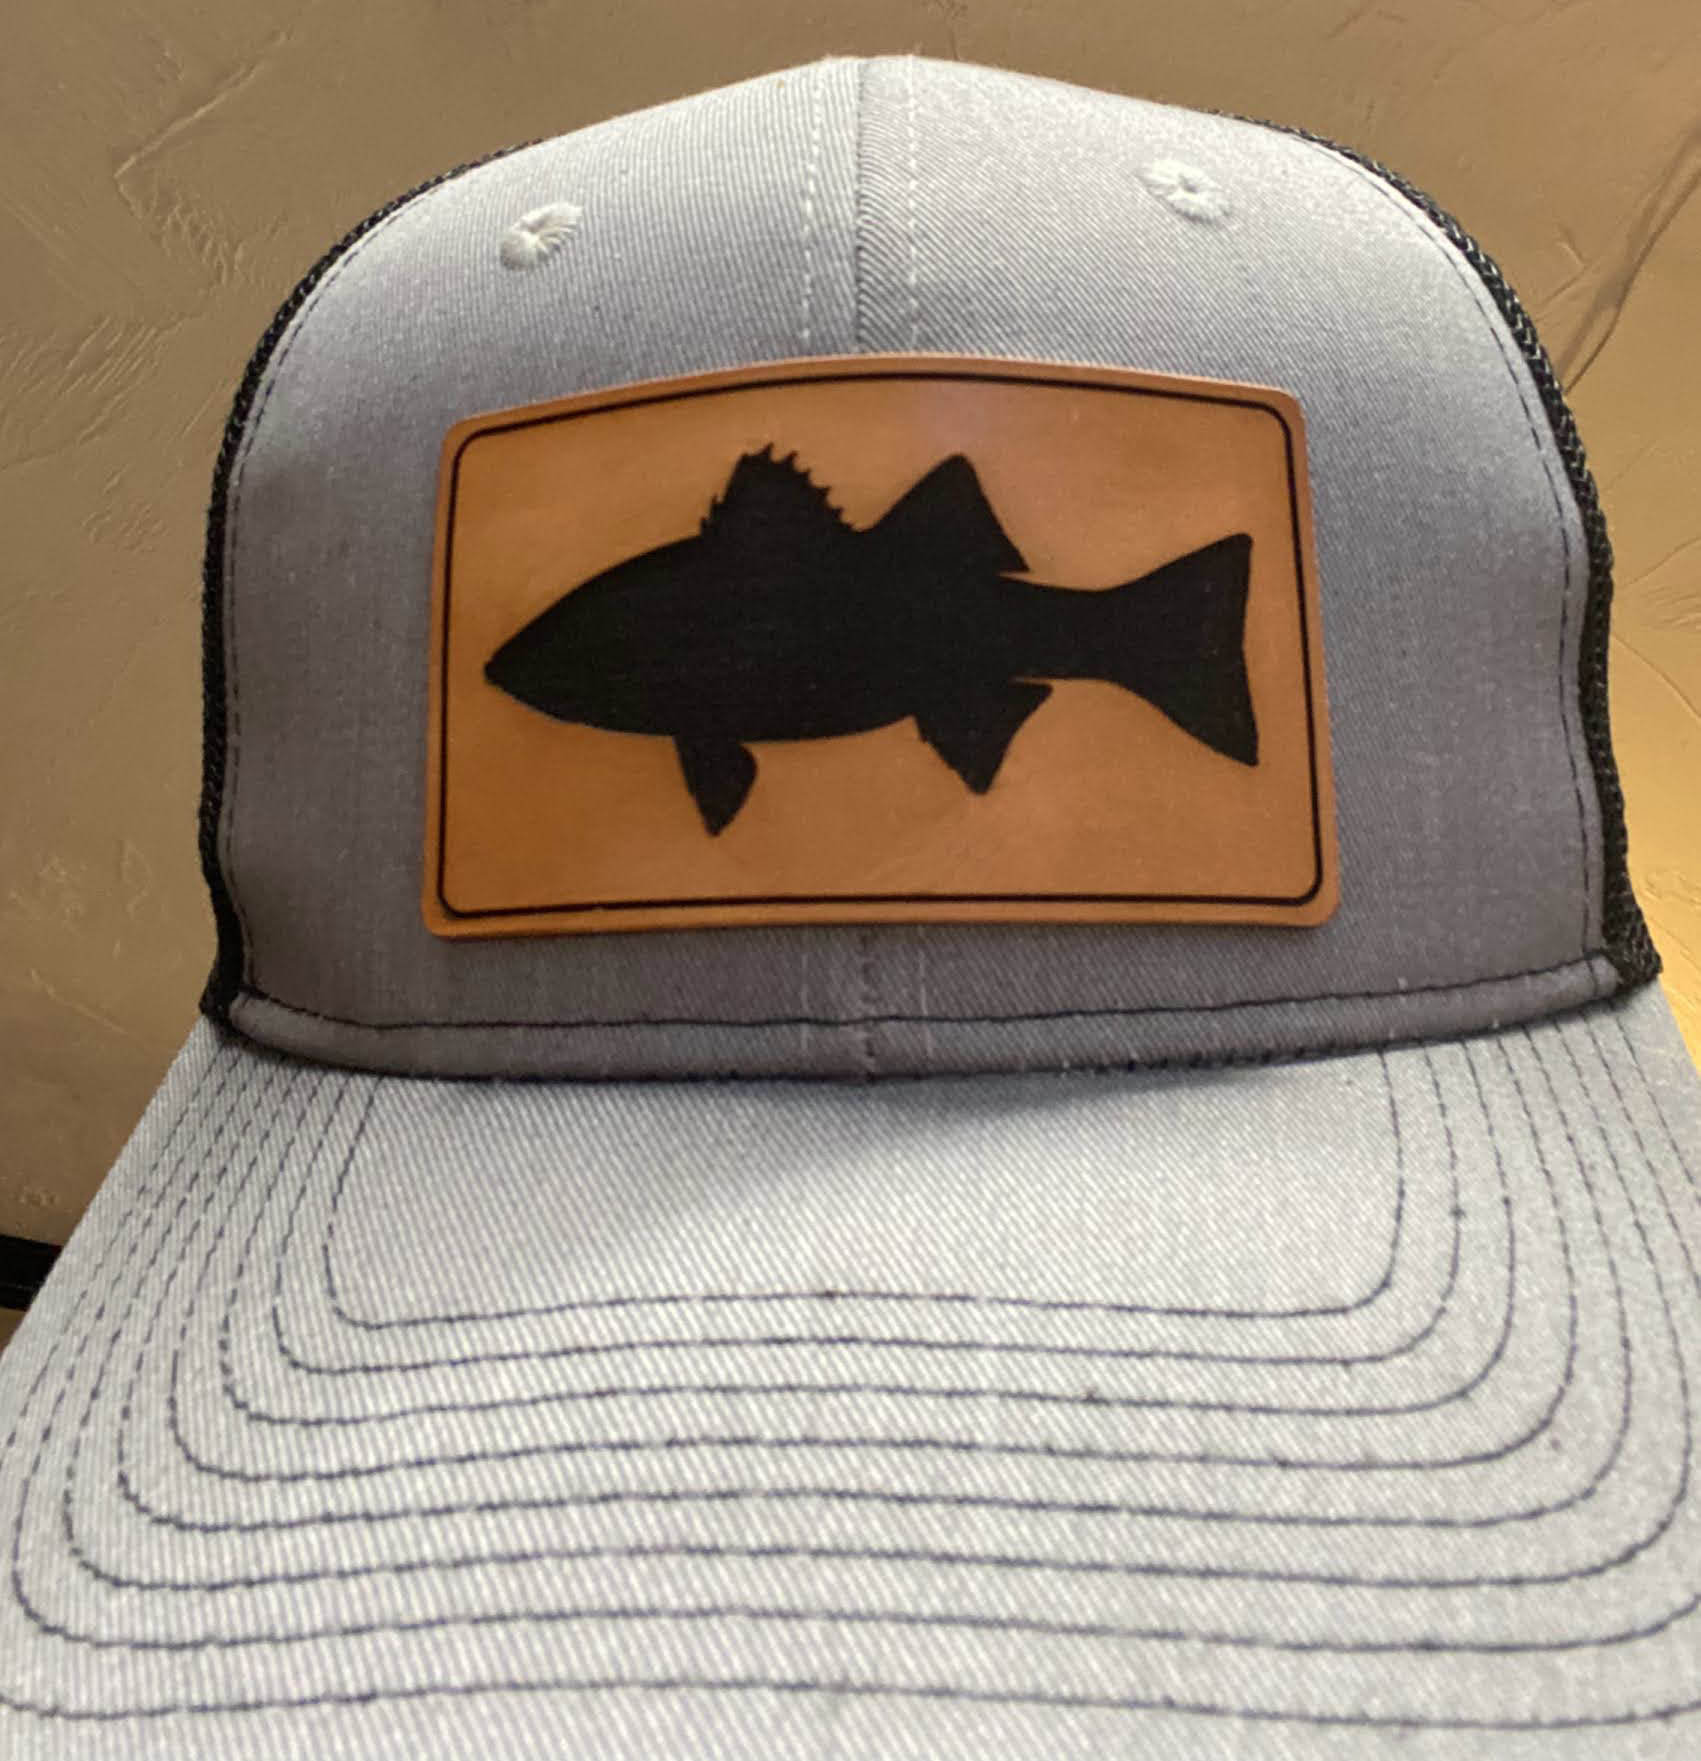 Tarpon, Tuna, Trout, Swordfish, Salmon Striped Bass, Trucker Leather Patch Hat, Laser Engraved, Fishing, Adjustable Size OSFM